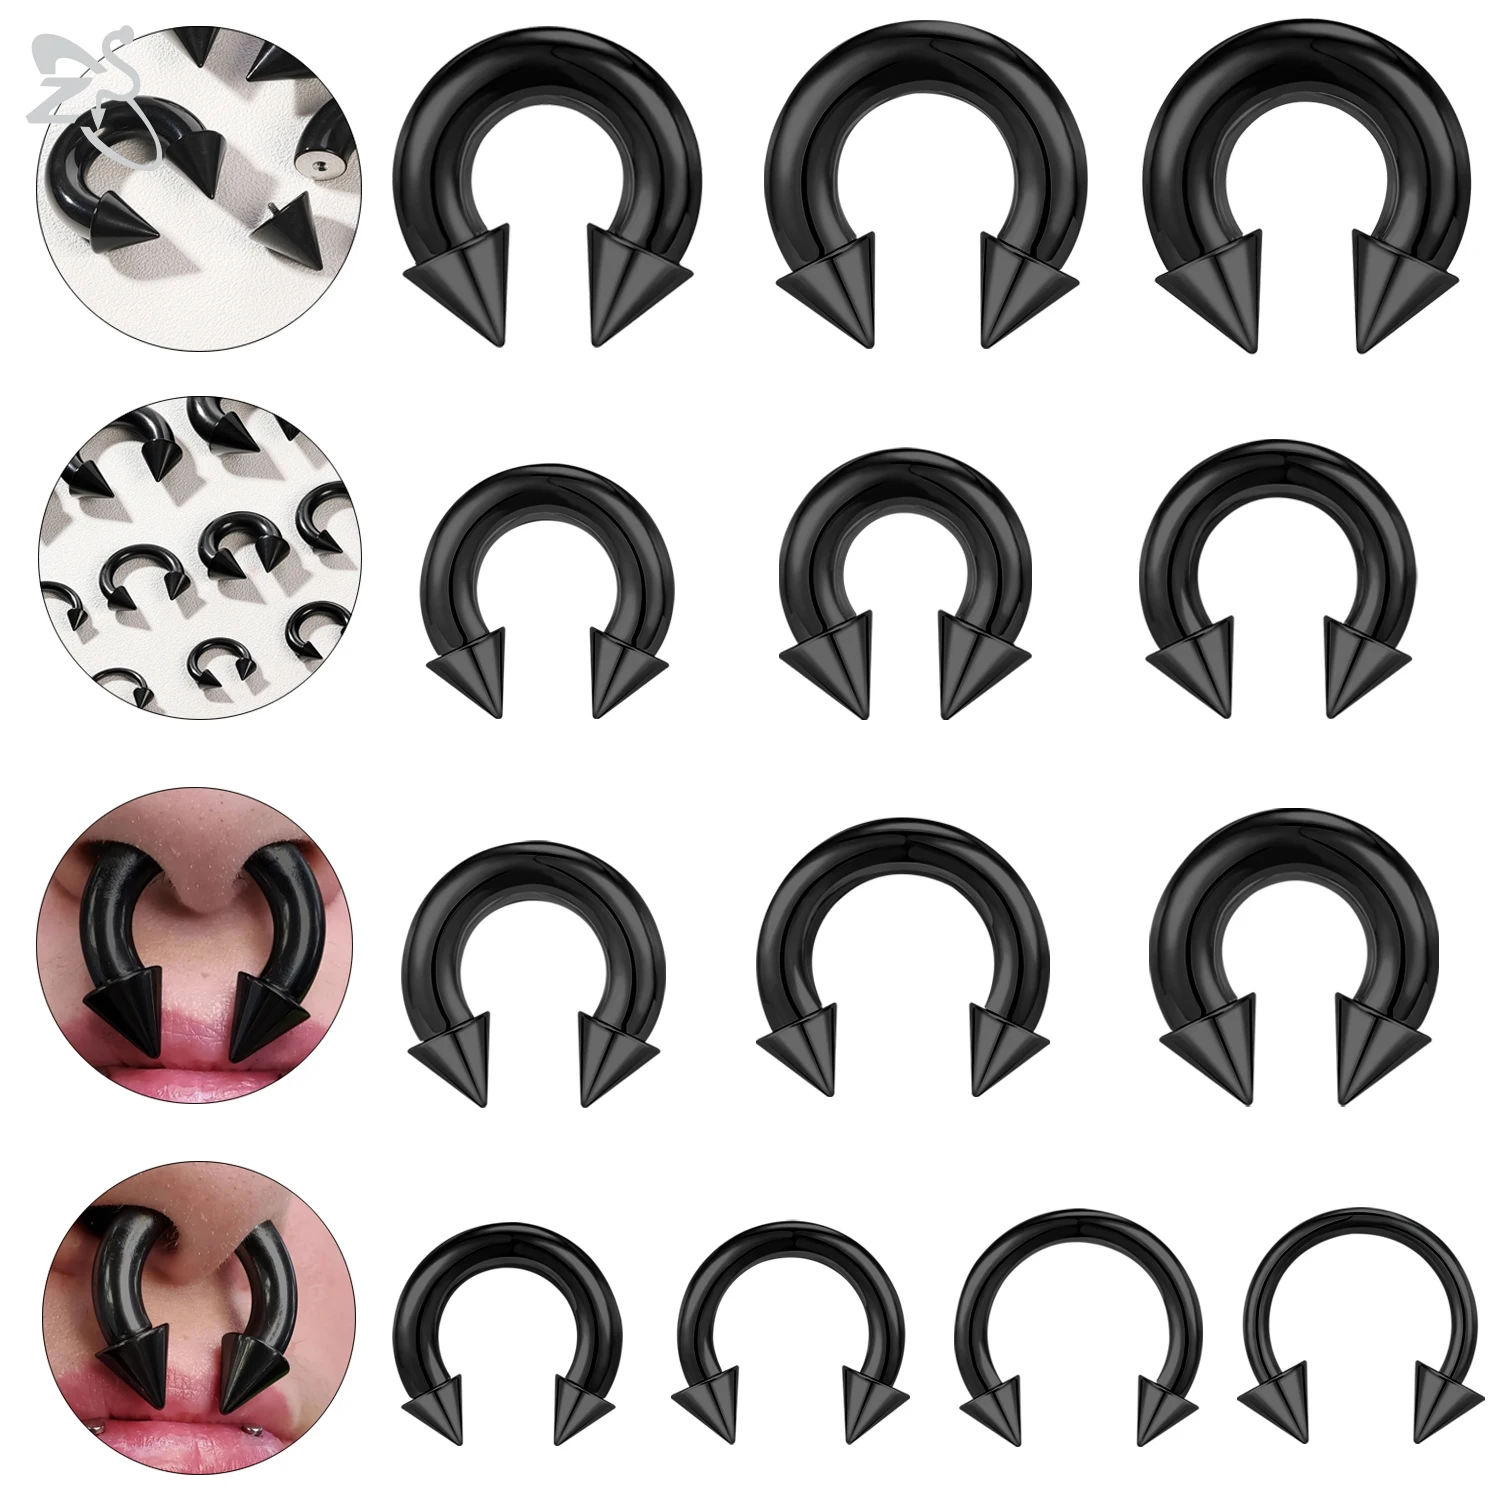 

ZS 1PC Black Color Septum Ring Spike Stainless Steel Nose Piercing 2/4/6/8G Large Gauge Internal Threaded Septum Ear Expander